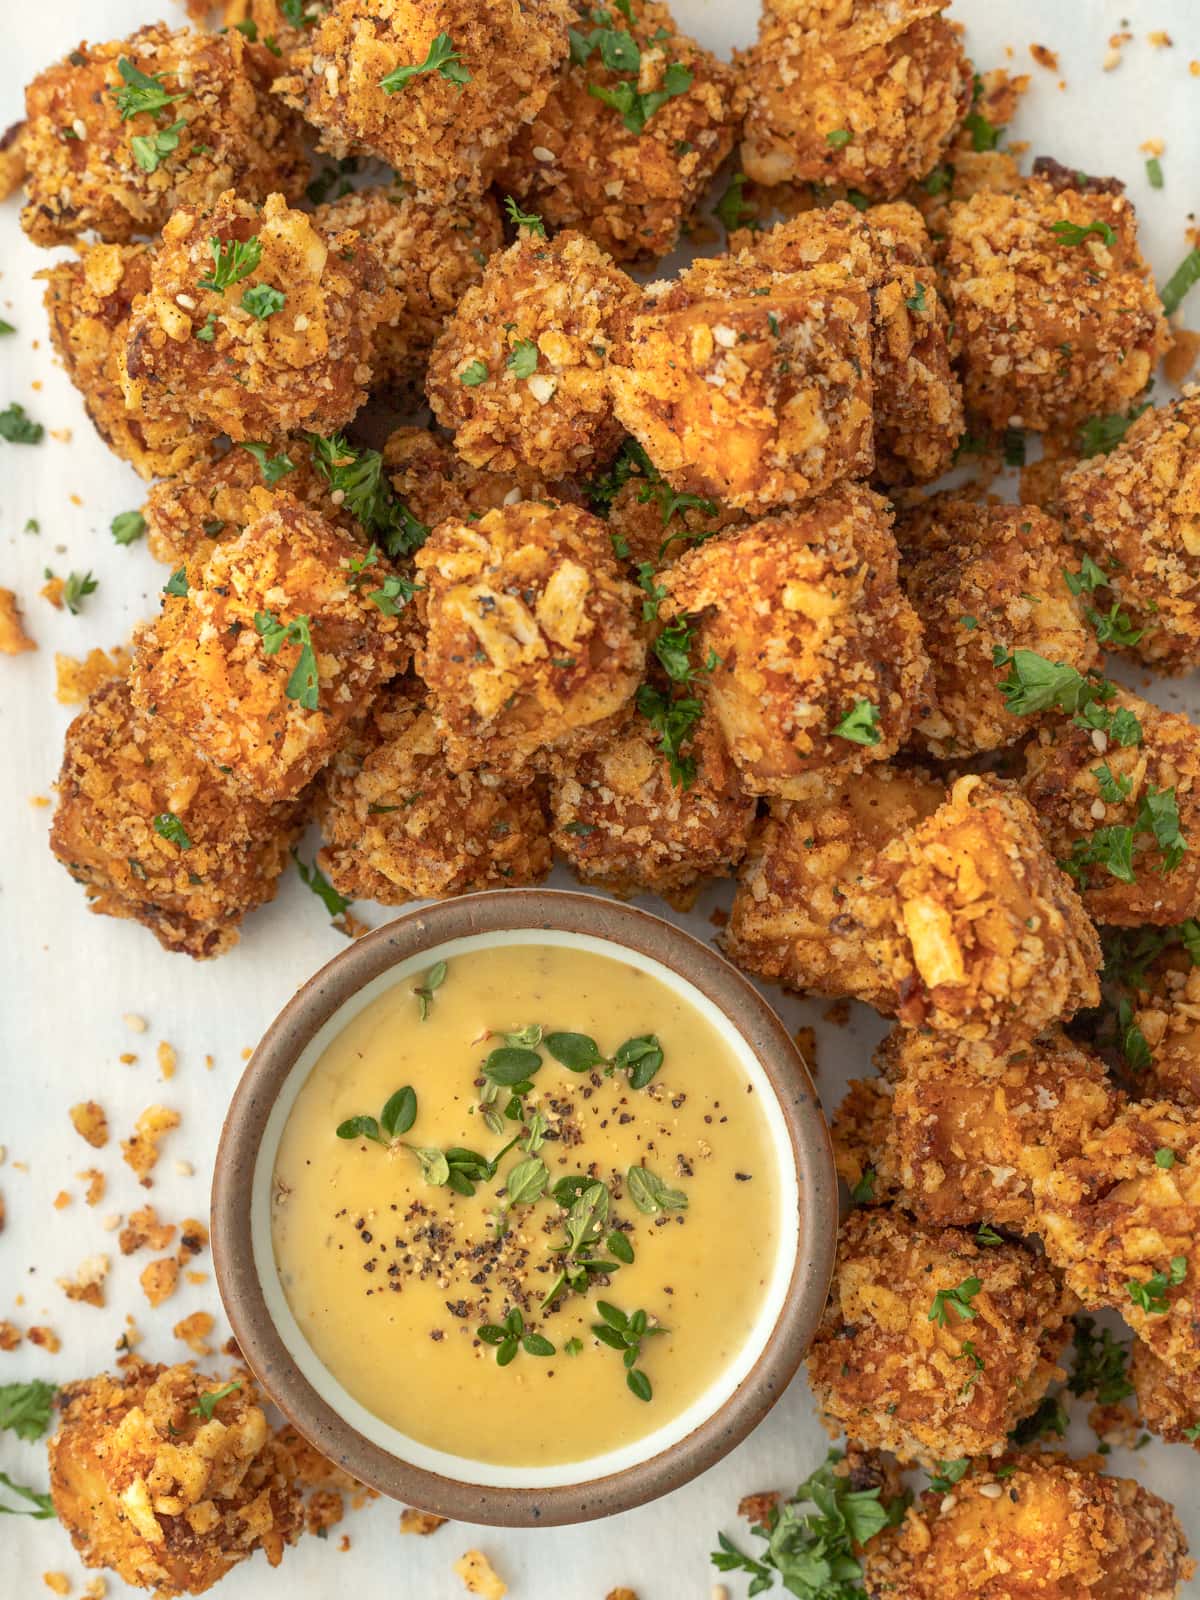 Pile of crunchy vegan chicken nuggets surrounding a dish of honey mustard sauce.